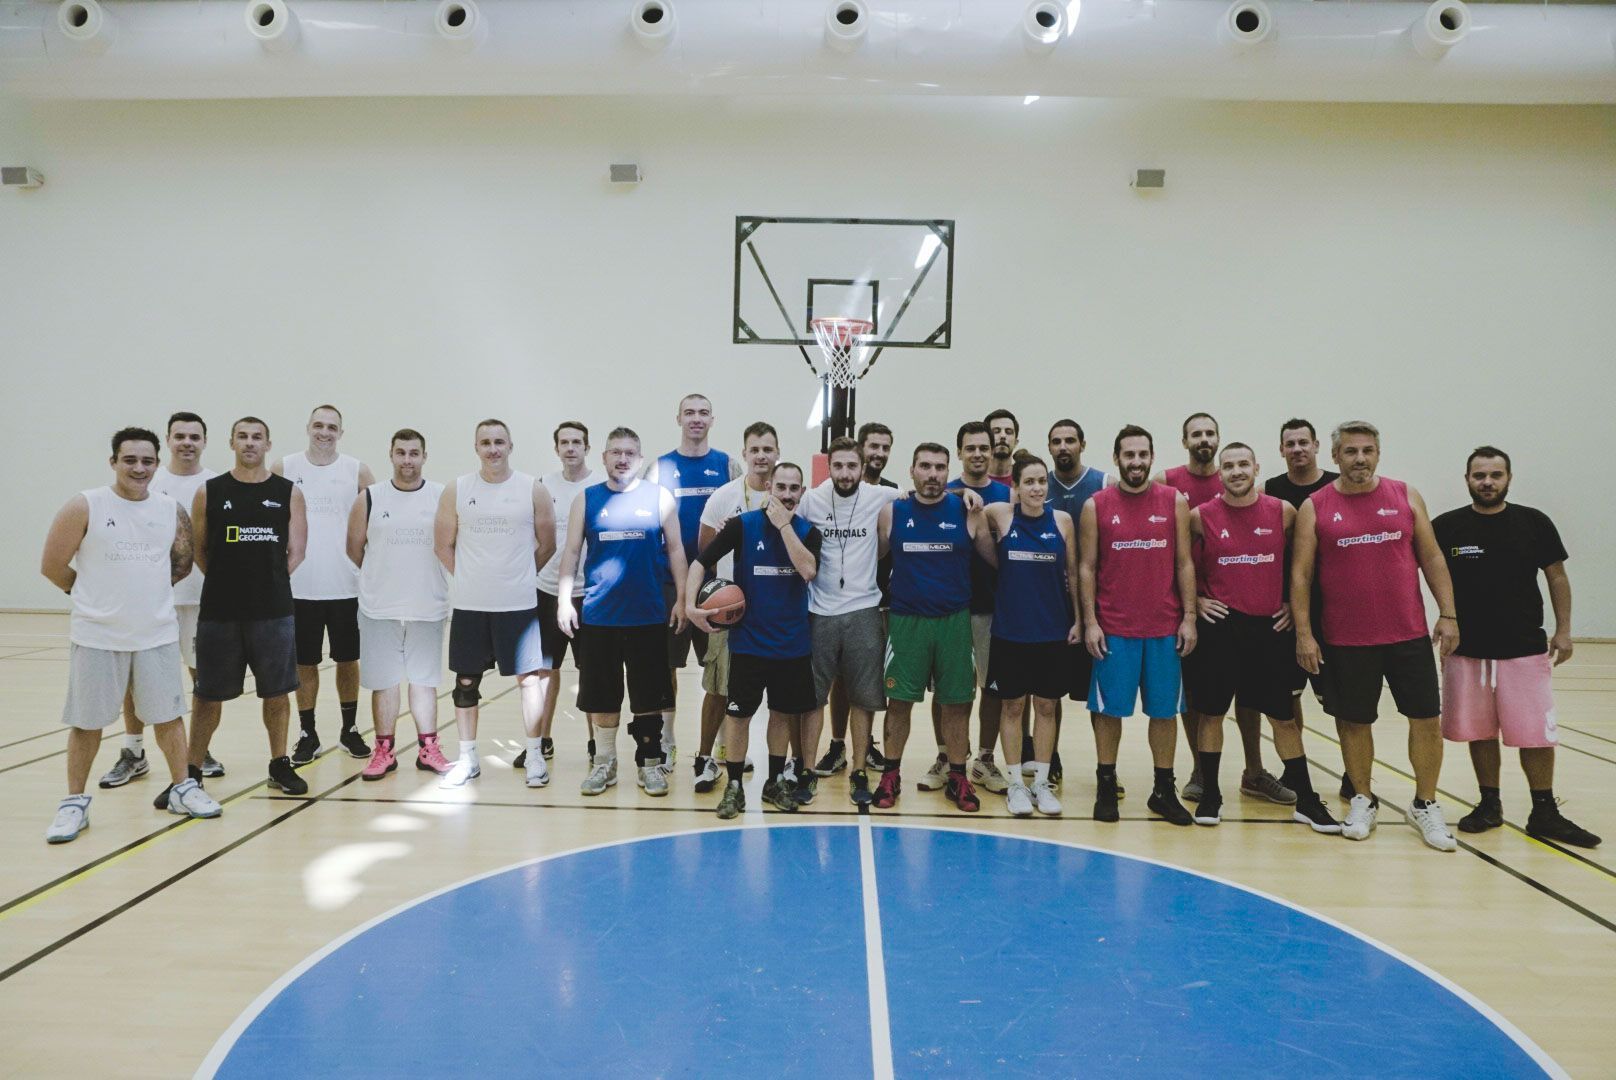 4on4 basketball tournament in Navarino Challenge (photo by Mike Tsolis).